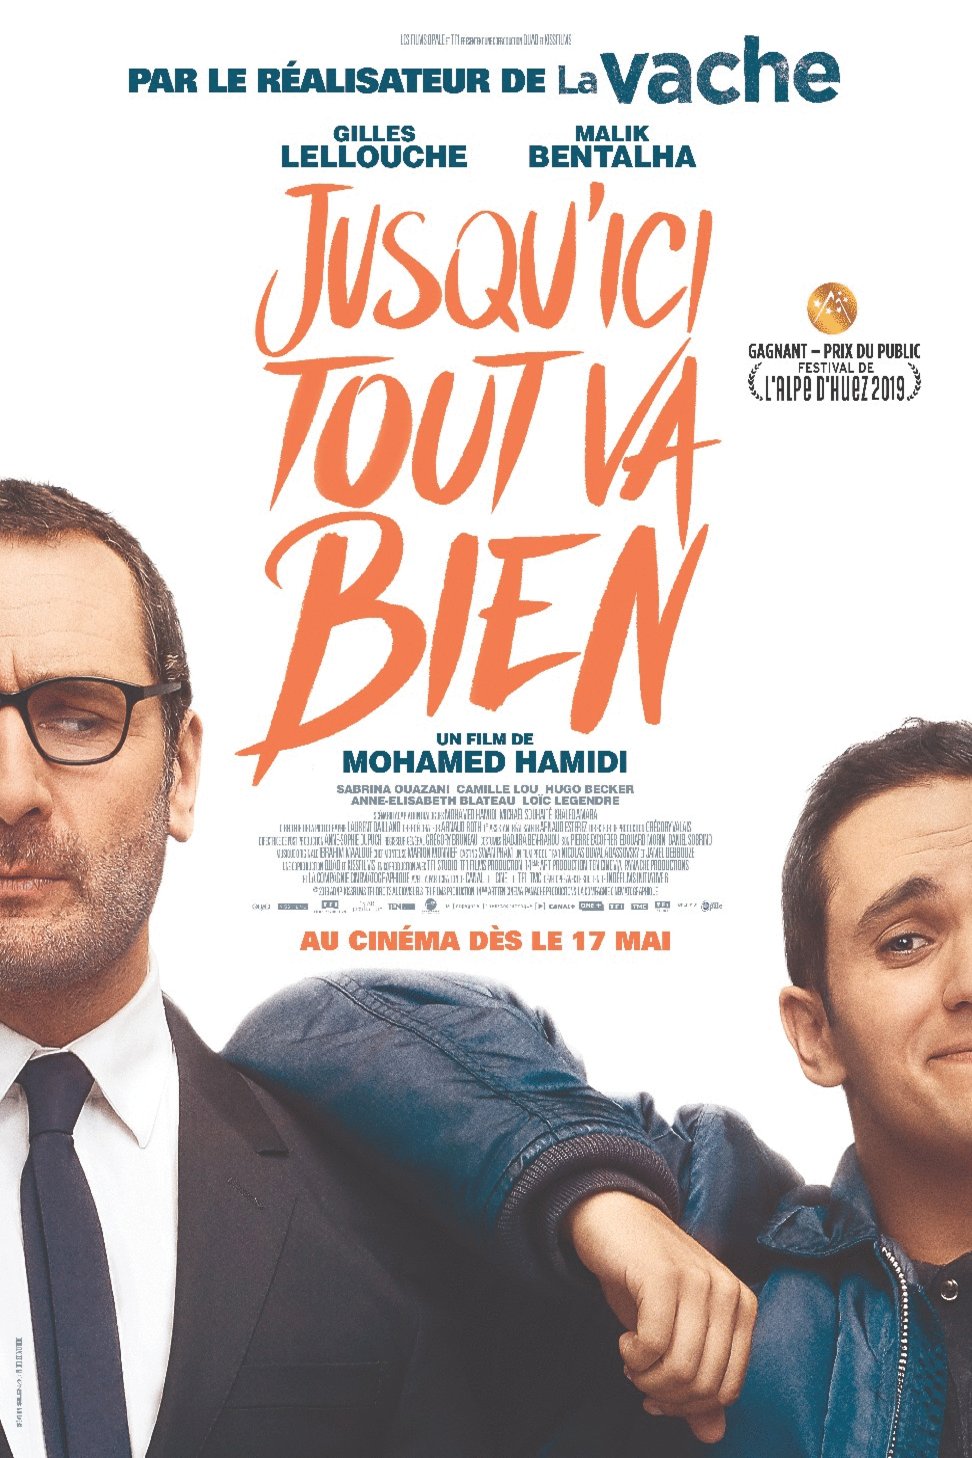 Poster of the movie Jusqu'ici tout va bien